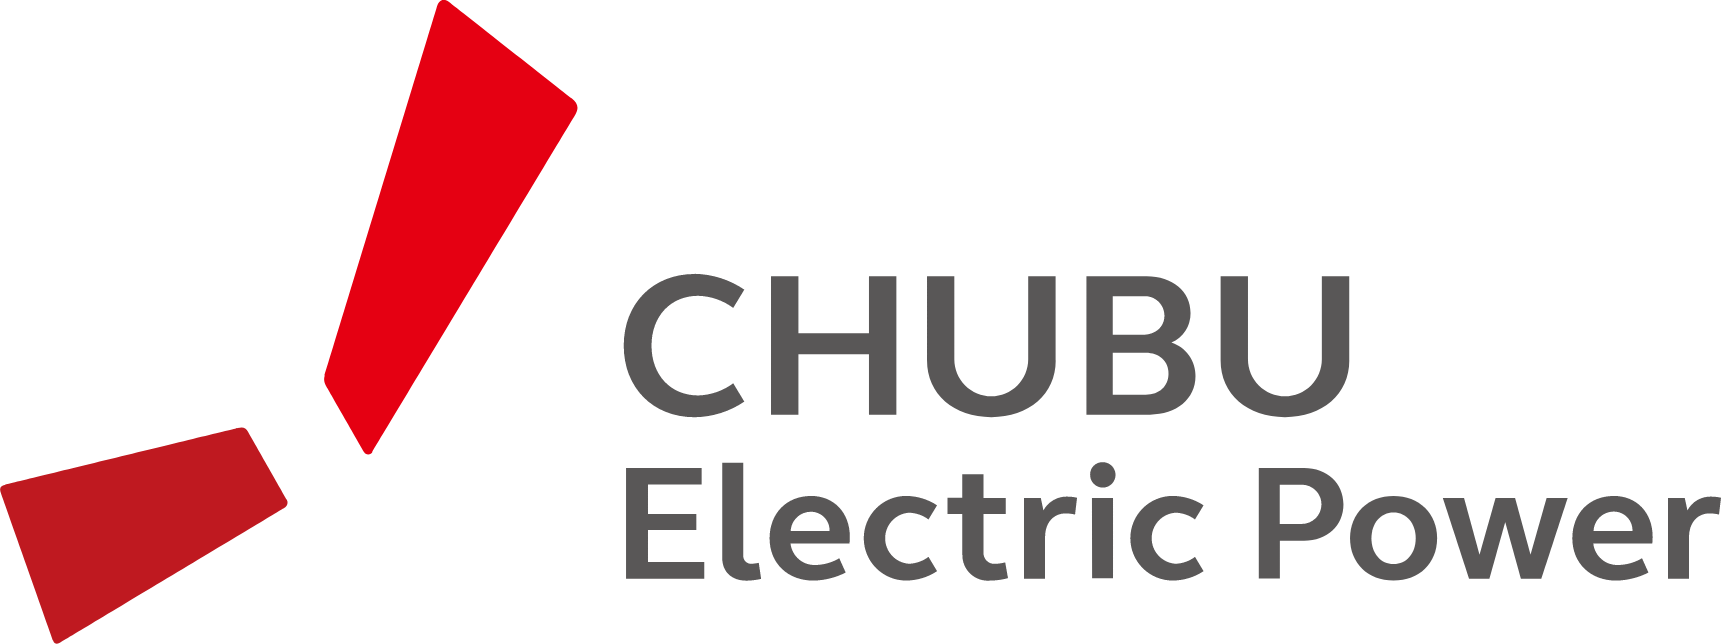 Chubu Electric Power
 logo large (transparent PNG)